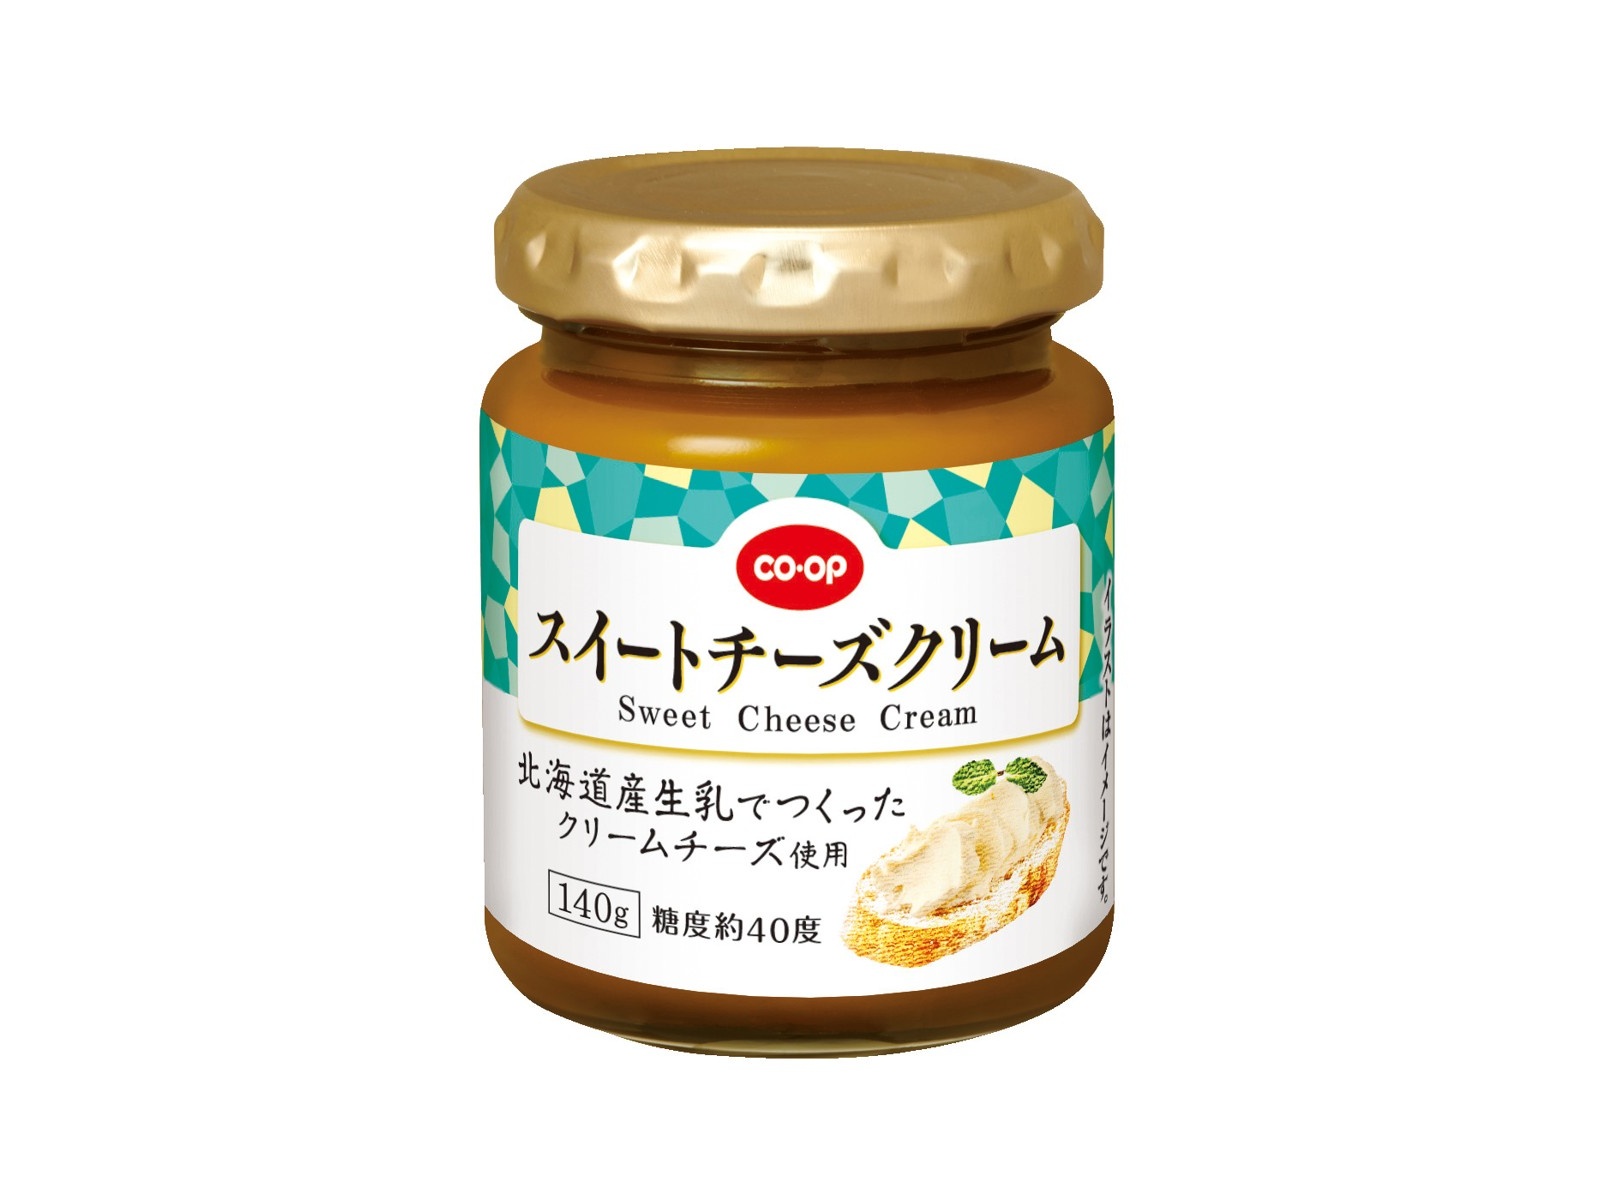 CO・OP スイートチーズクリーム 140g| コープこうべネット